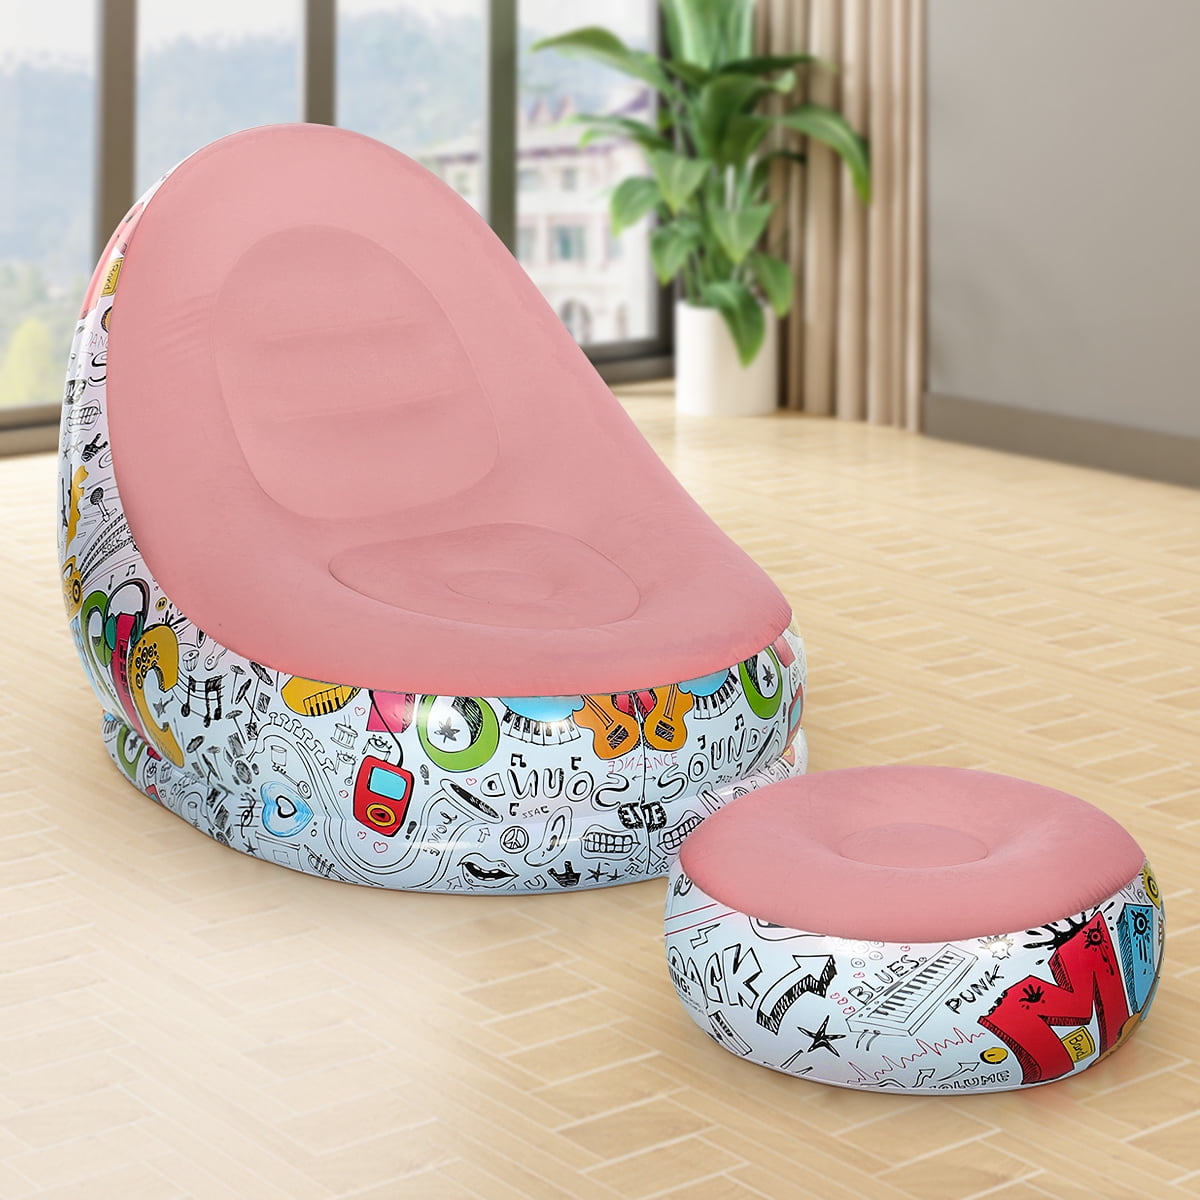 Brand New Girls kids Disney Princess Inflatable Chair indoor outdoor fun beach 